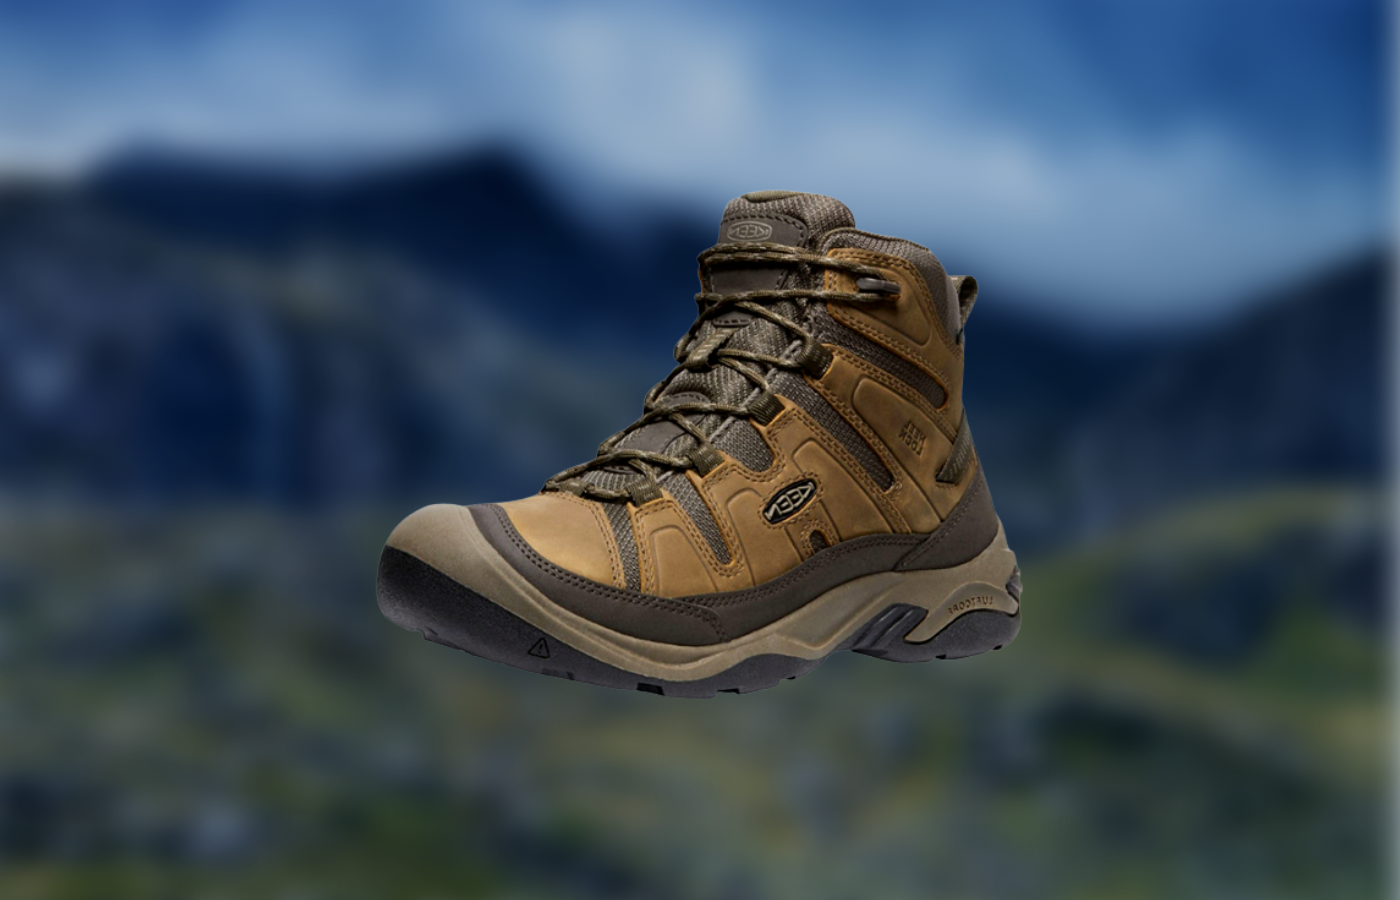 Keen Circadia budget hiking boot